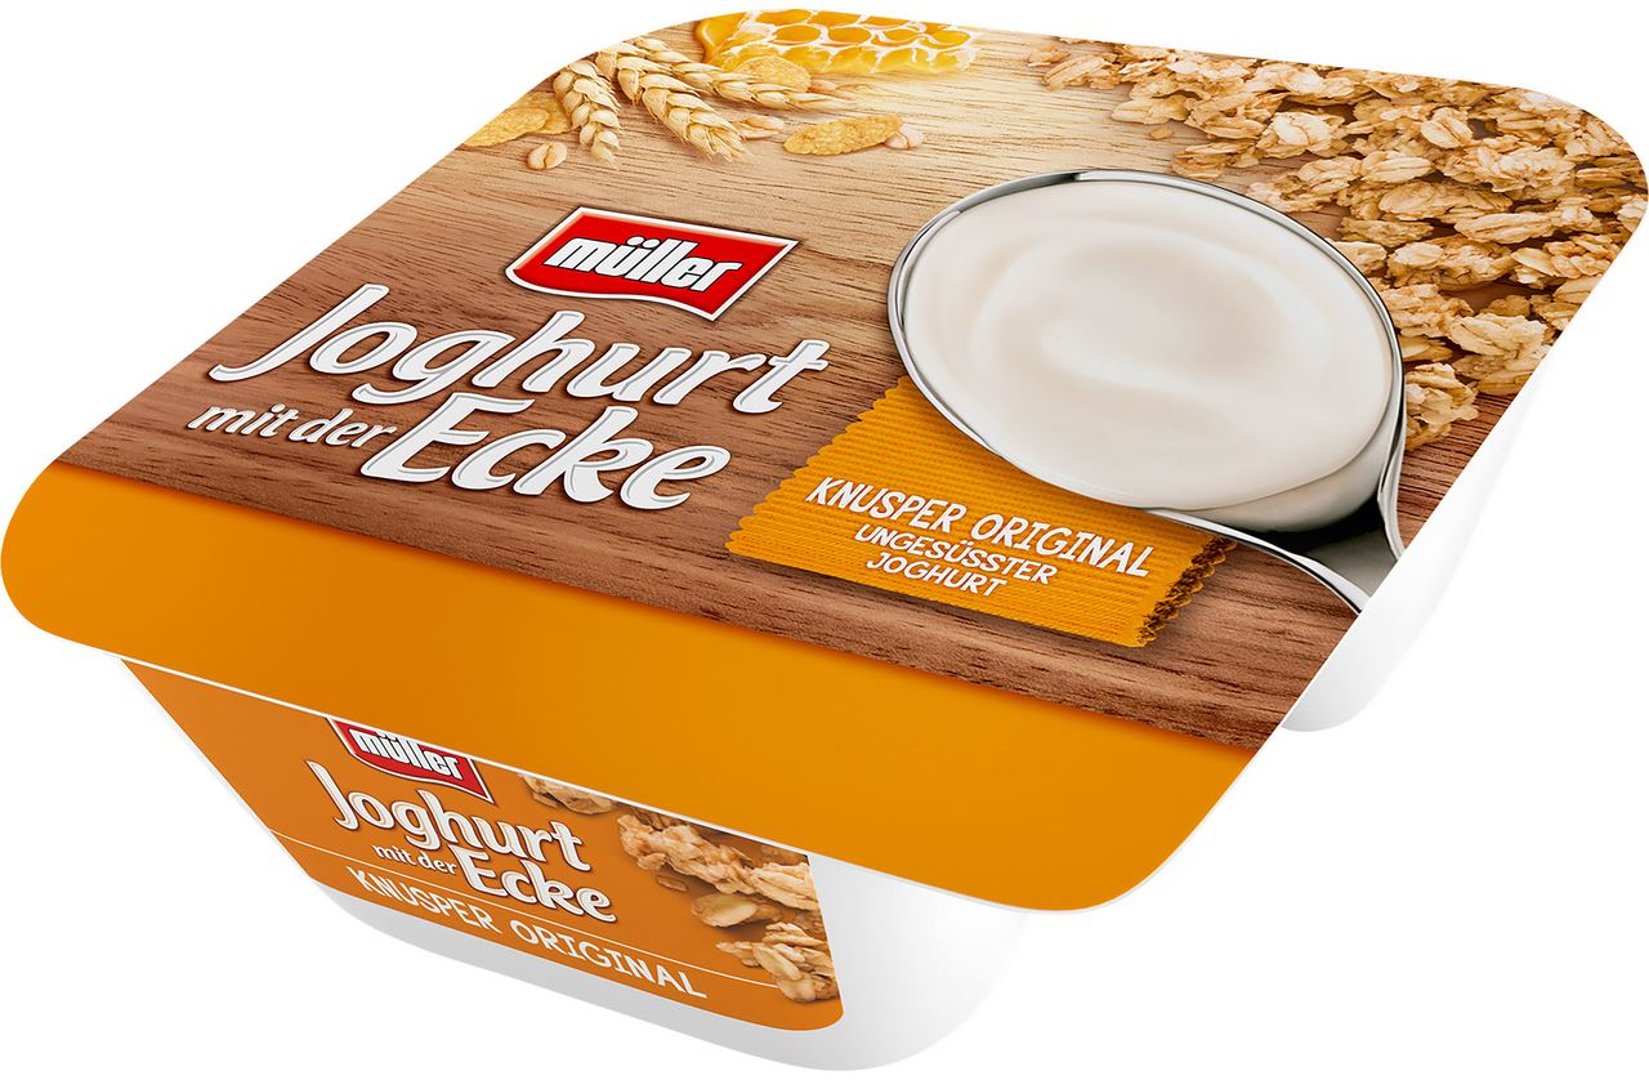 müller - Joghurt mit der Ecke Knusper gekühlt Original - 150 g